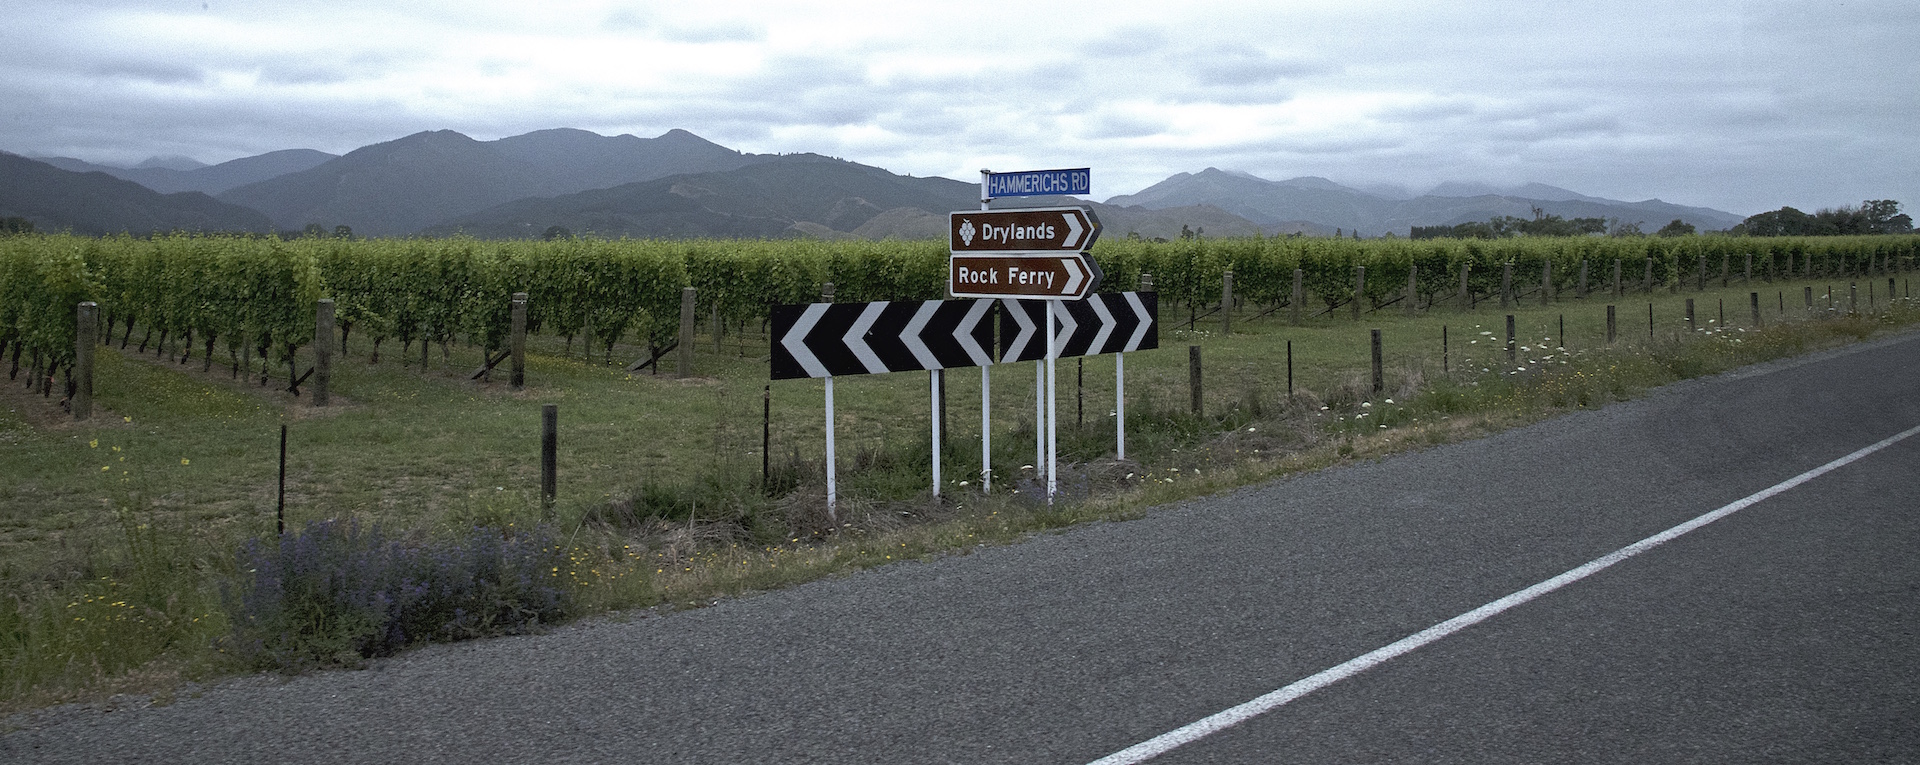 South Island New Zealand Road Trip Told Through 30 Photos